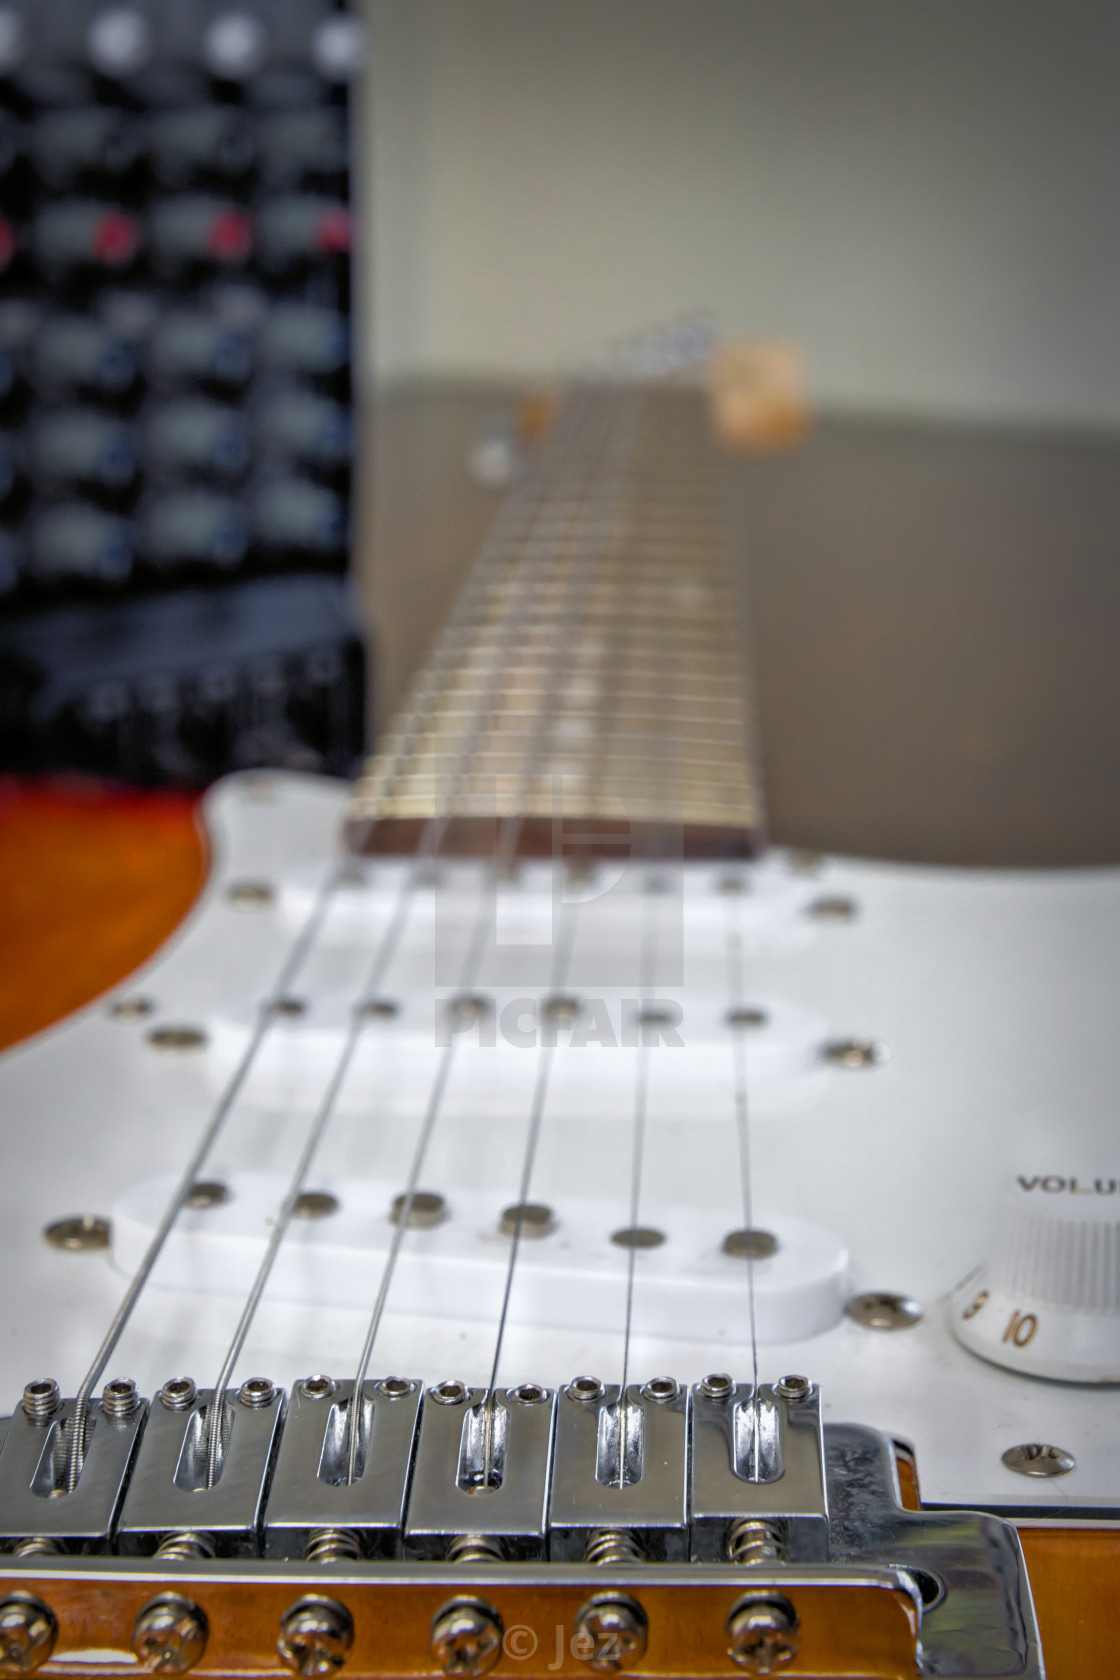 "The guitarist" stock image